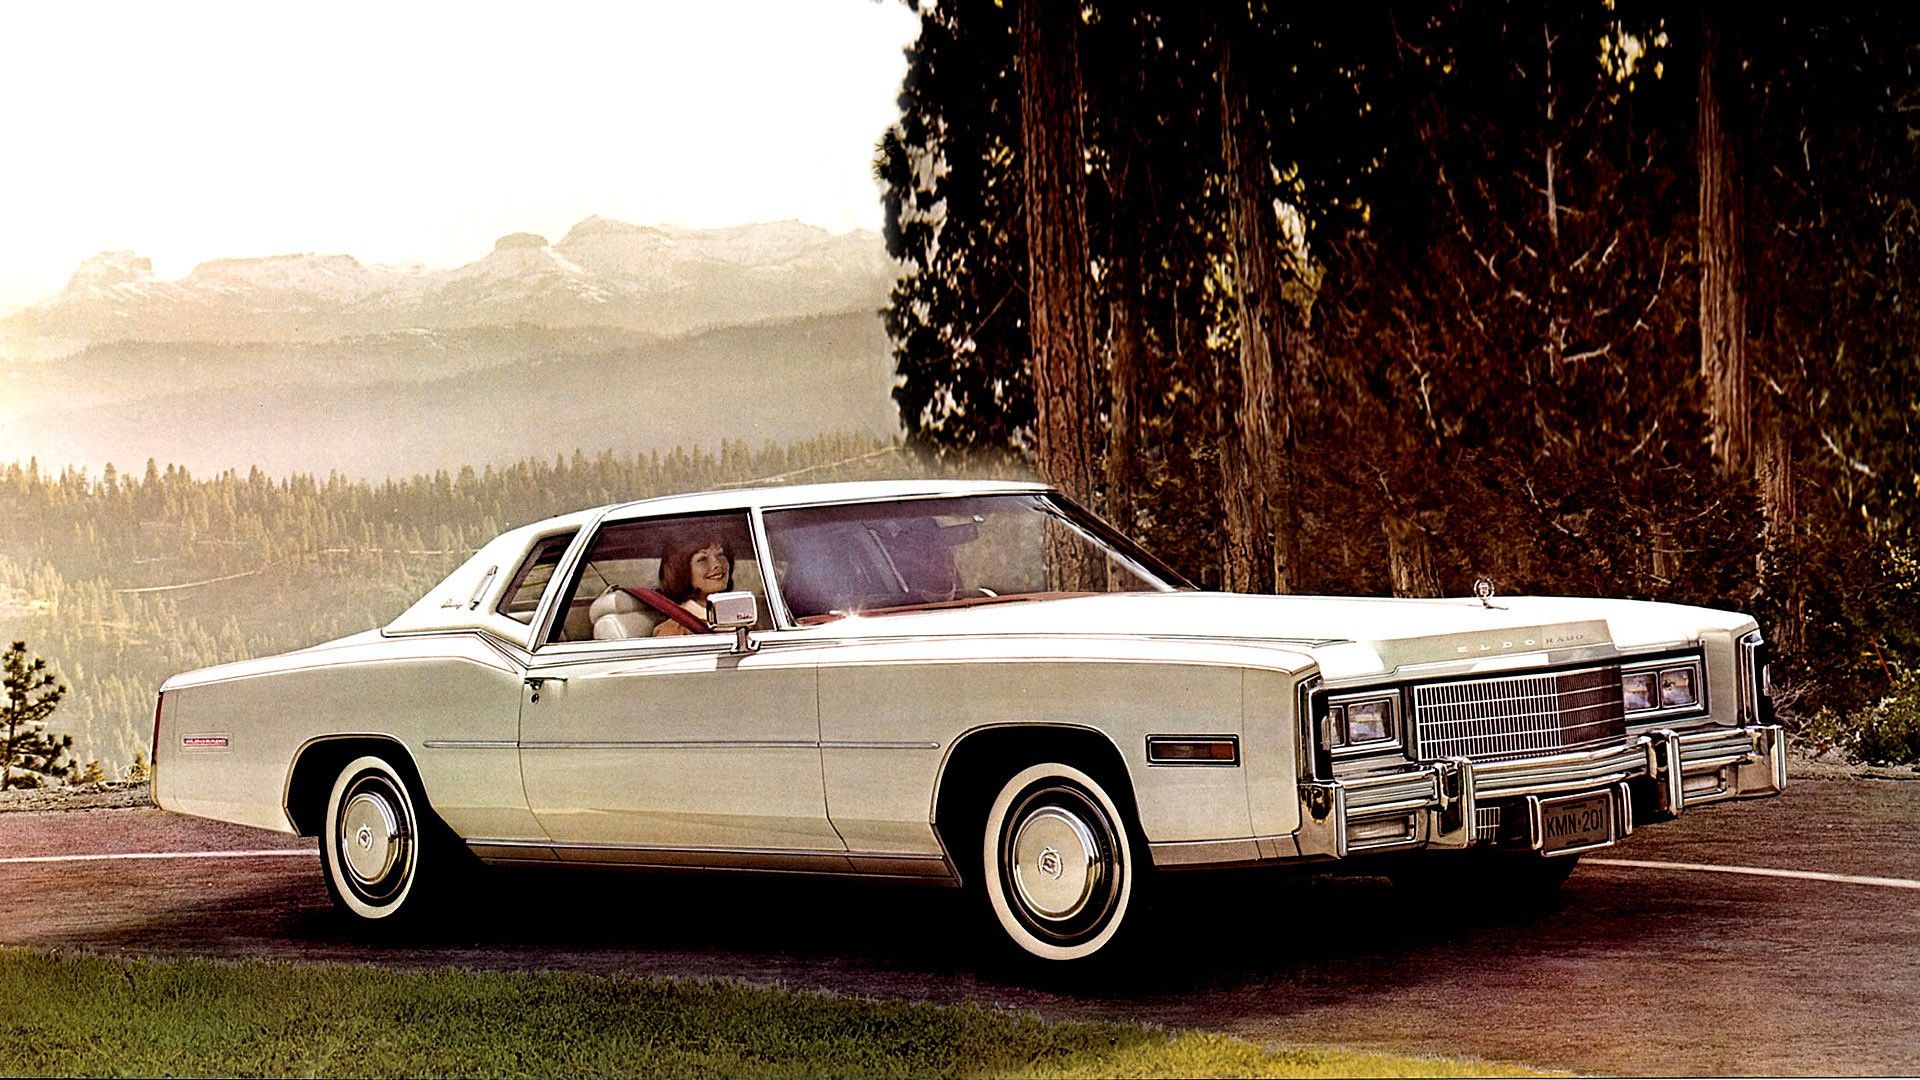 Cadillac Classic Cars Wallpaper - MixHD wallpapers | COOL CARS ...